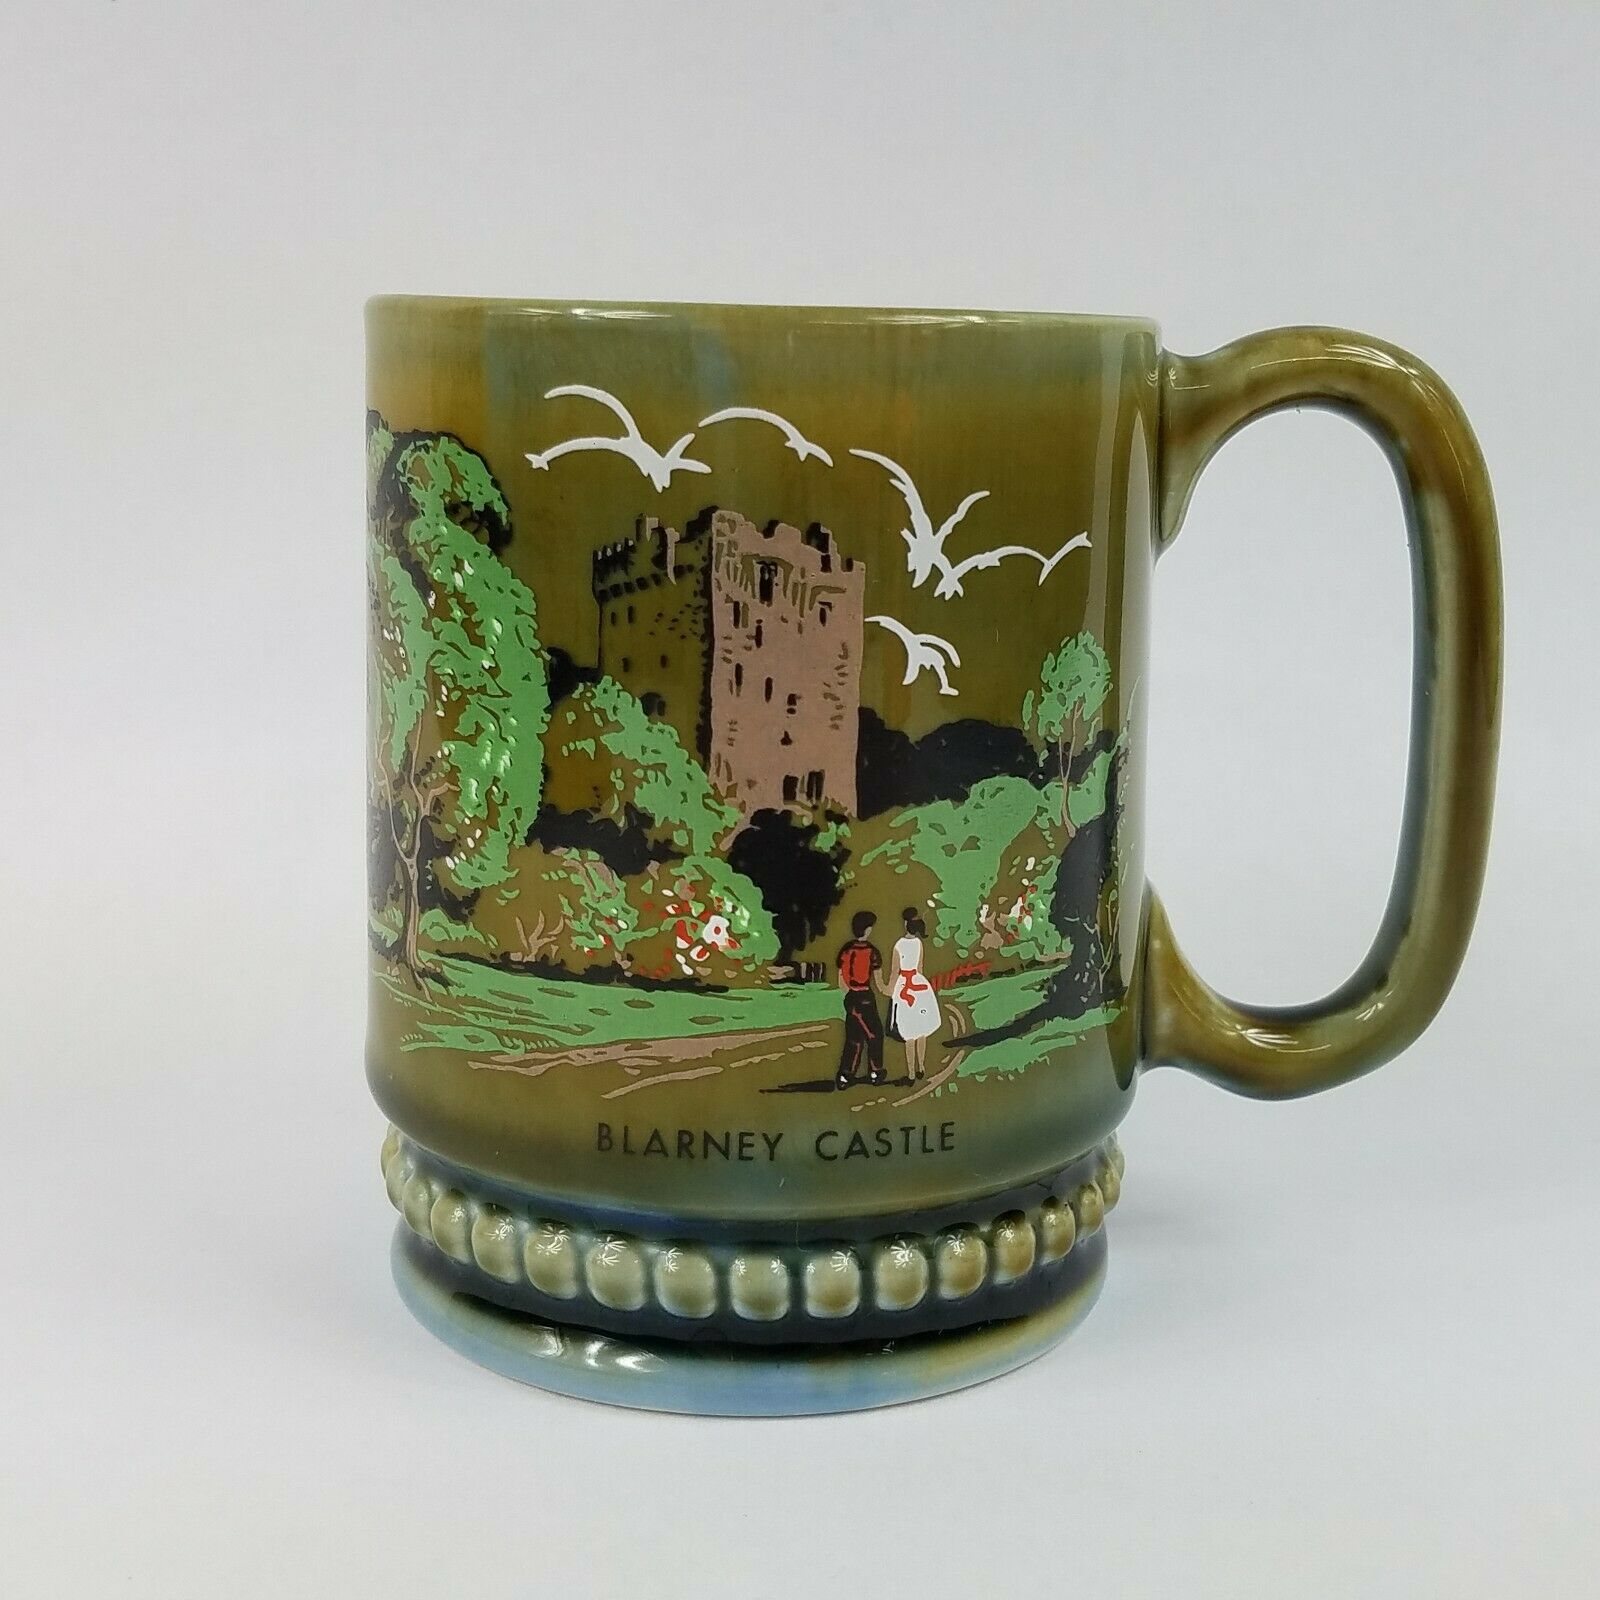 Vintage Irish Porcelain Coffee Cup Mug Collector Souvenir Blarney Castle Clover